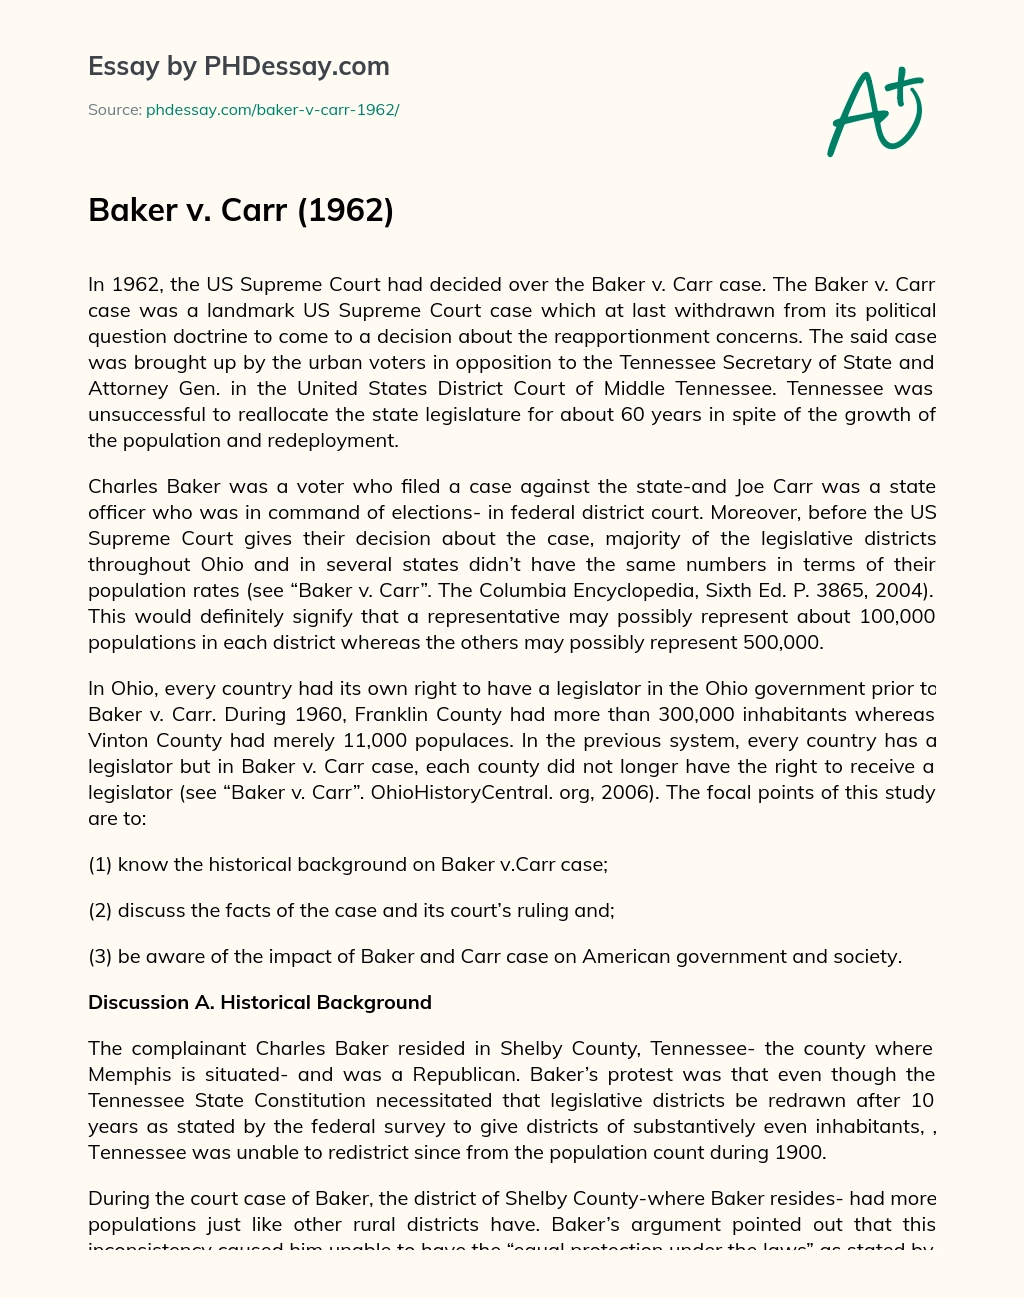 Baker v. Carr (1962) essay